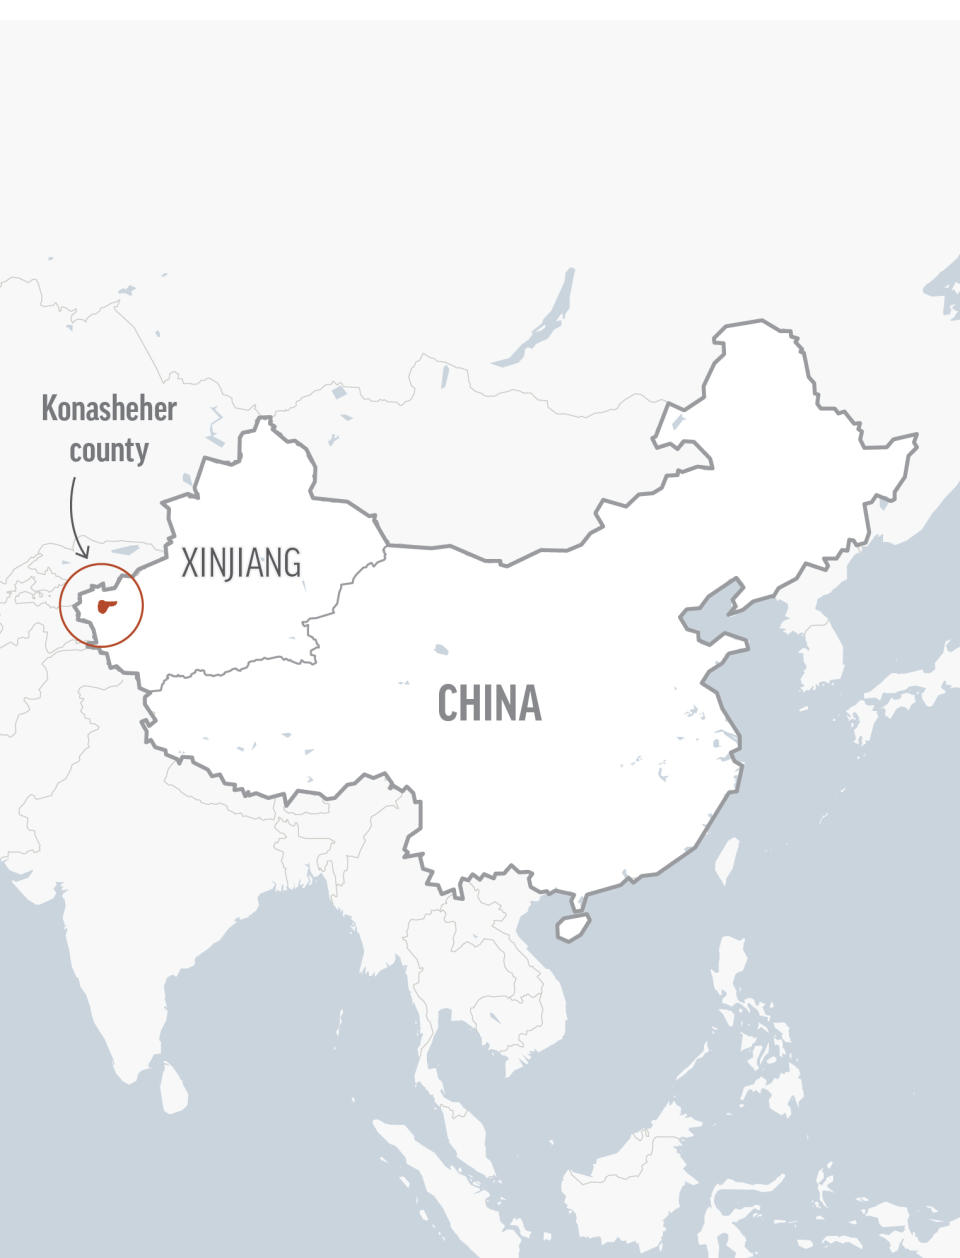 Konasheher County is a county in Kashgar Prefecture, Xinjiang Uyghur Autonomous Region, China.